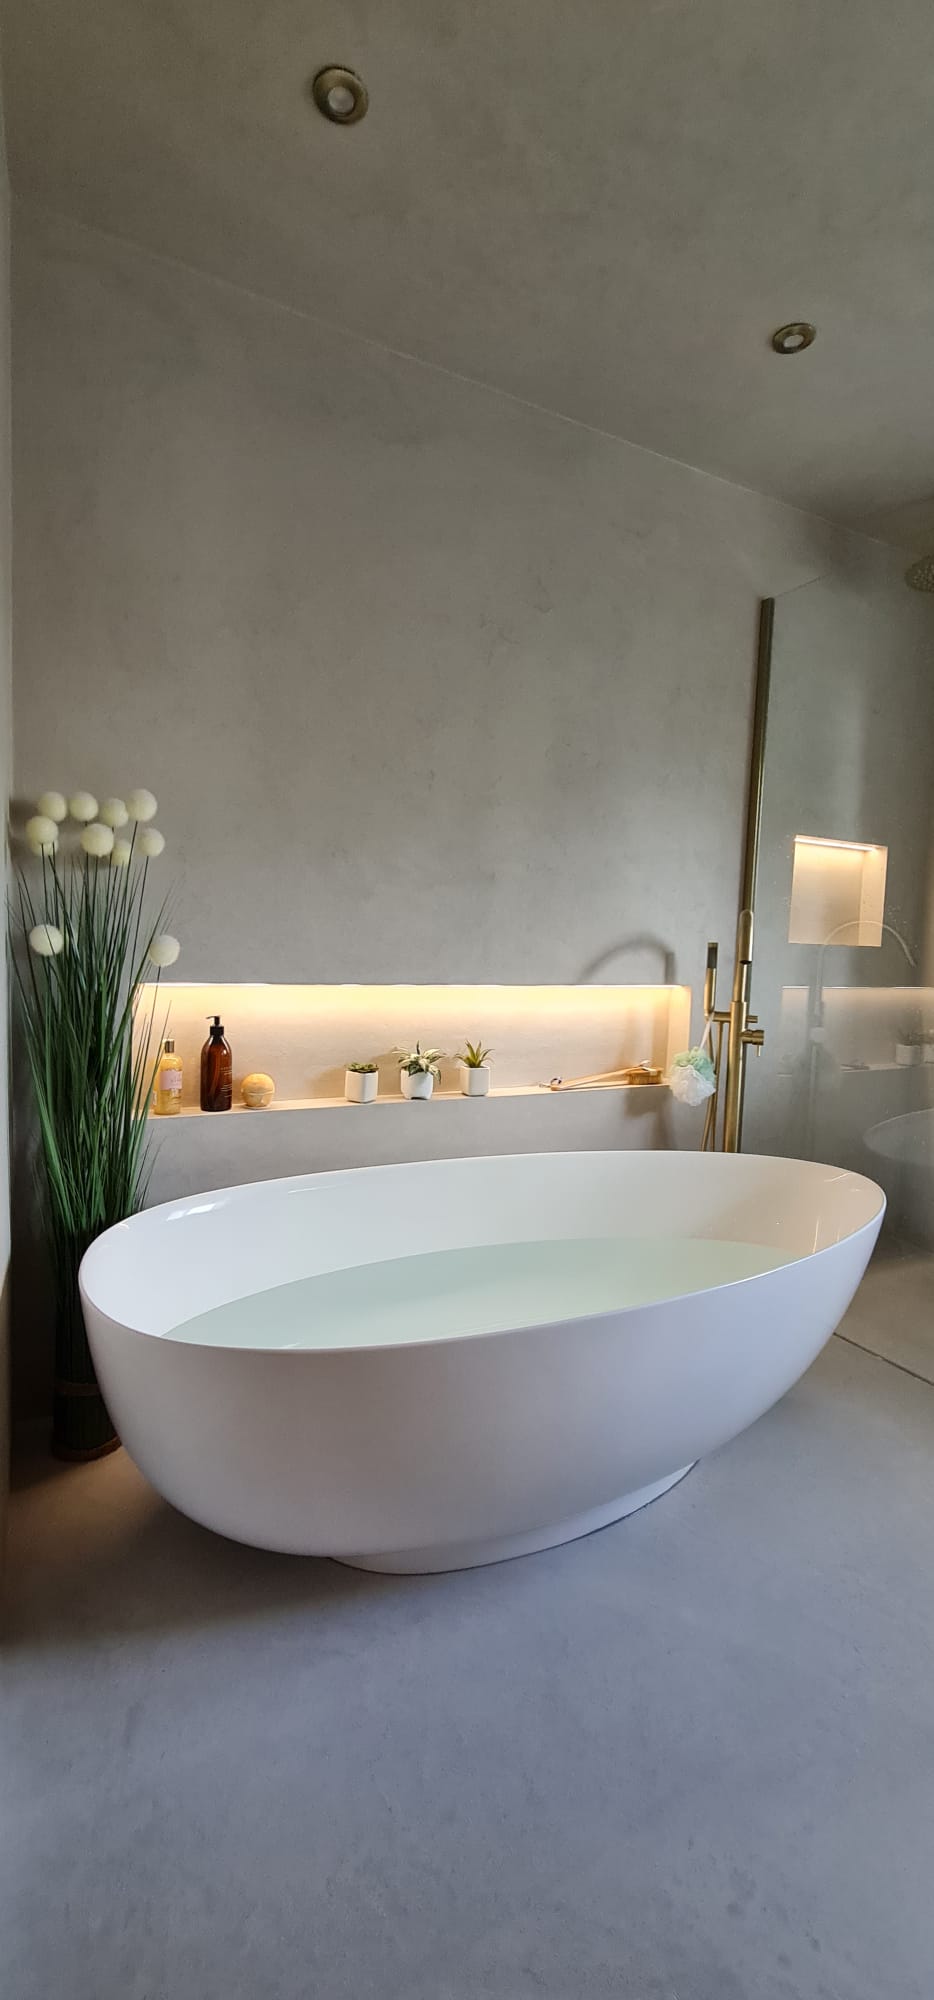 Ultra Finishes - Venetian Plaster Surrey - Beautiful Micro Cement Bathroom